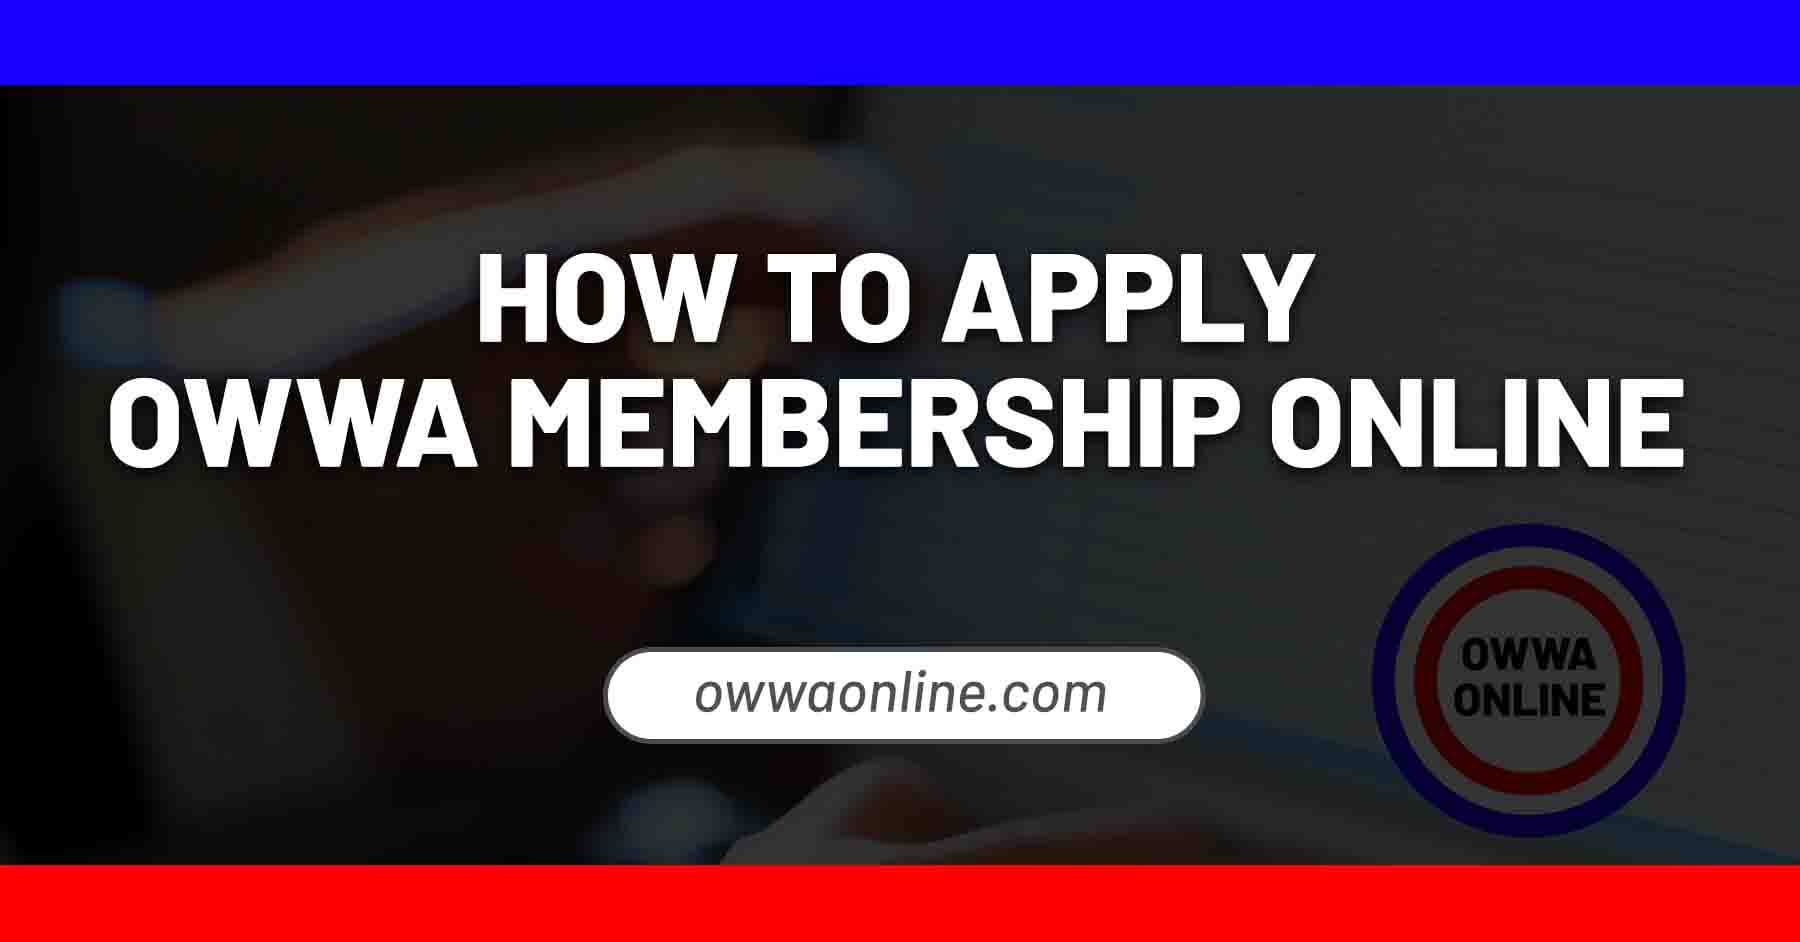 owwa membership renewal online application for ofws